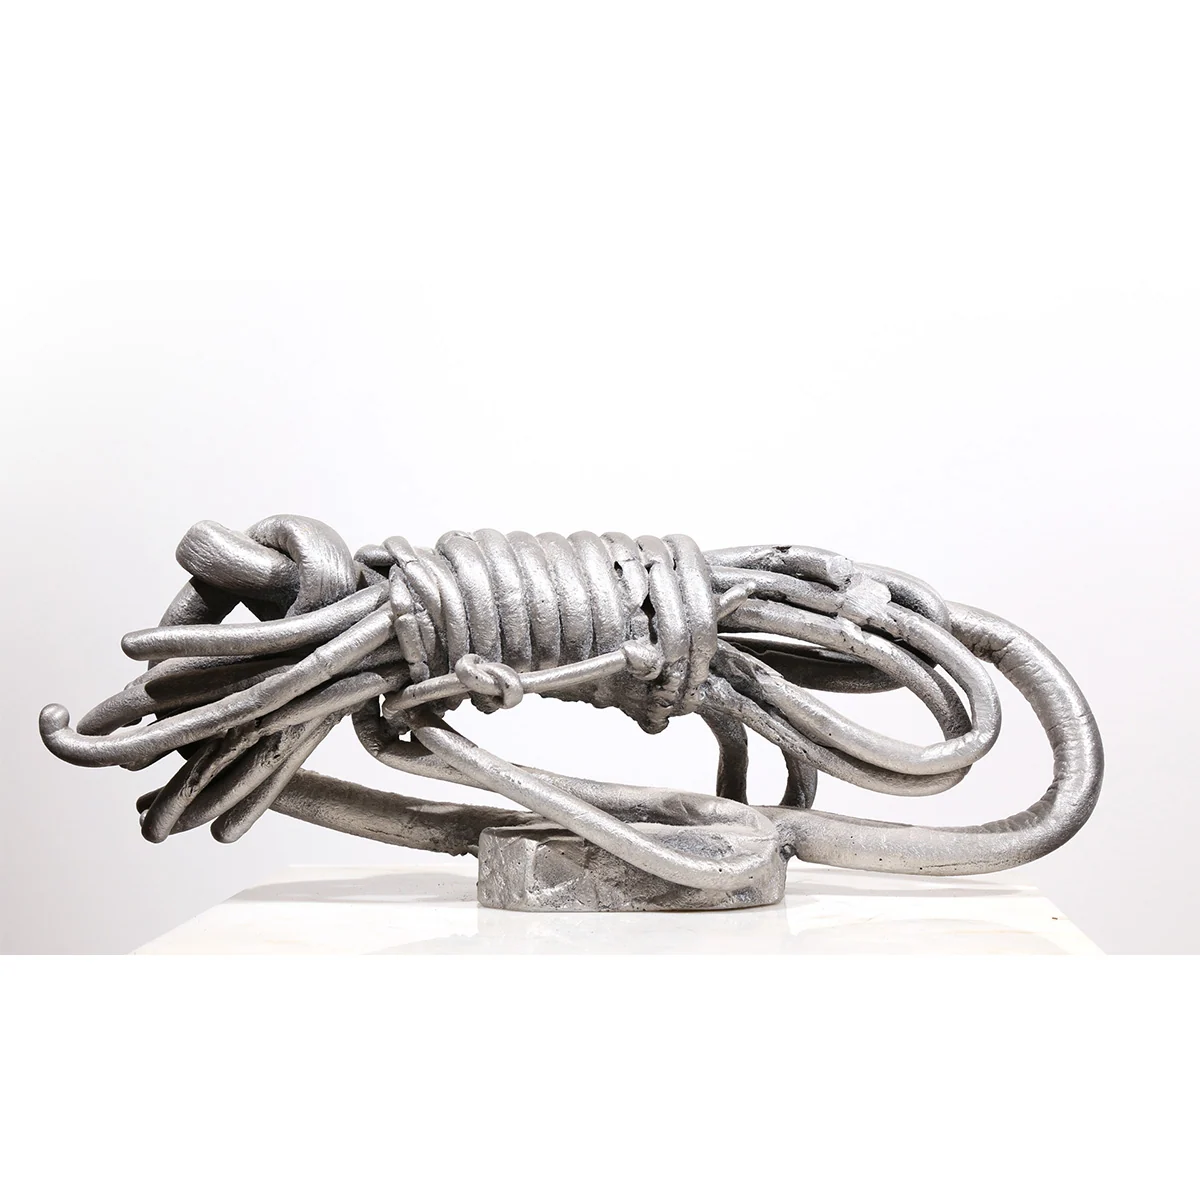 Wrapped | aluminum | 5 1/2 x 5 1/2 x 15 inches- Knot- Pure -Knots- Sand-casted -aluminum -sculpture -by -Mel -Hantz